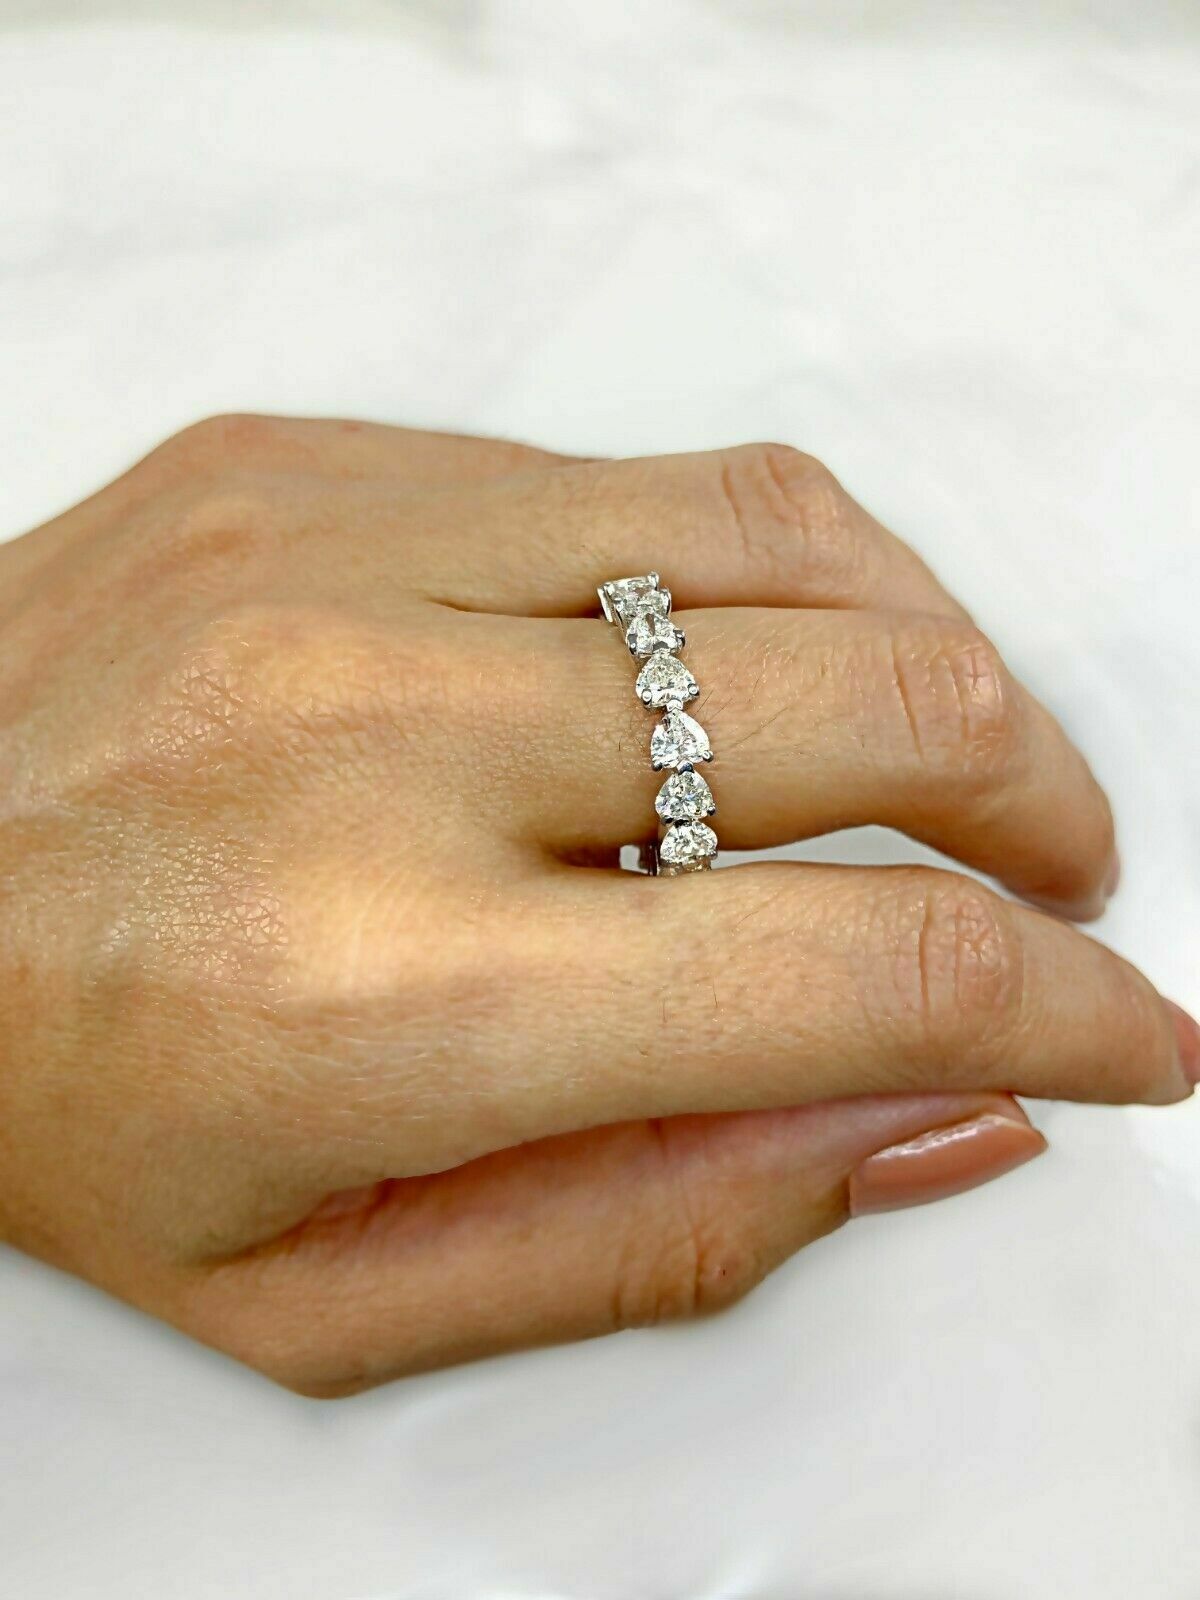 18K White Gold 3.33CT Heart Cut Diamond Eternity Ring Certified Natural F VVS2